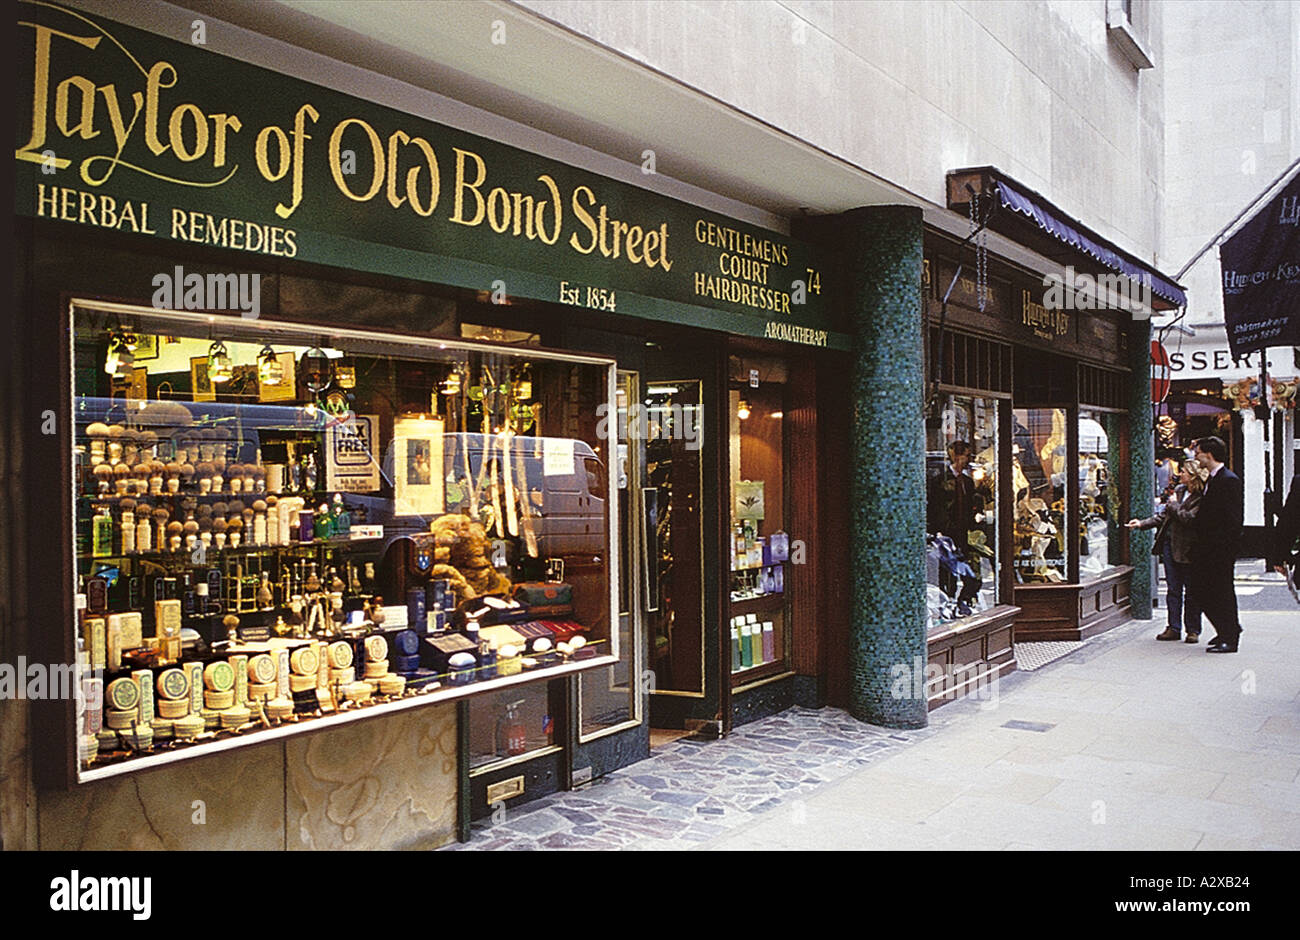 Taylor of Old Bond Street Jermyn Street Shops London UK Stockfotografie -  Alamy